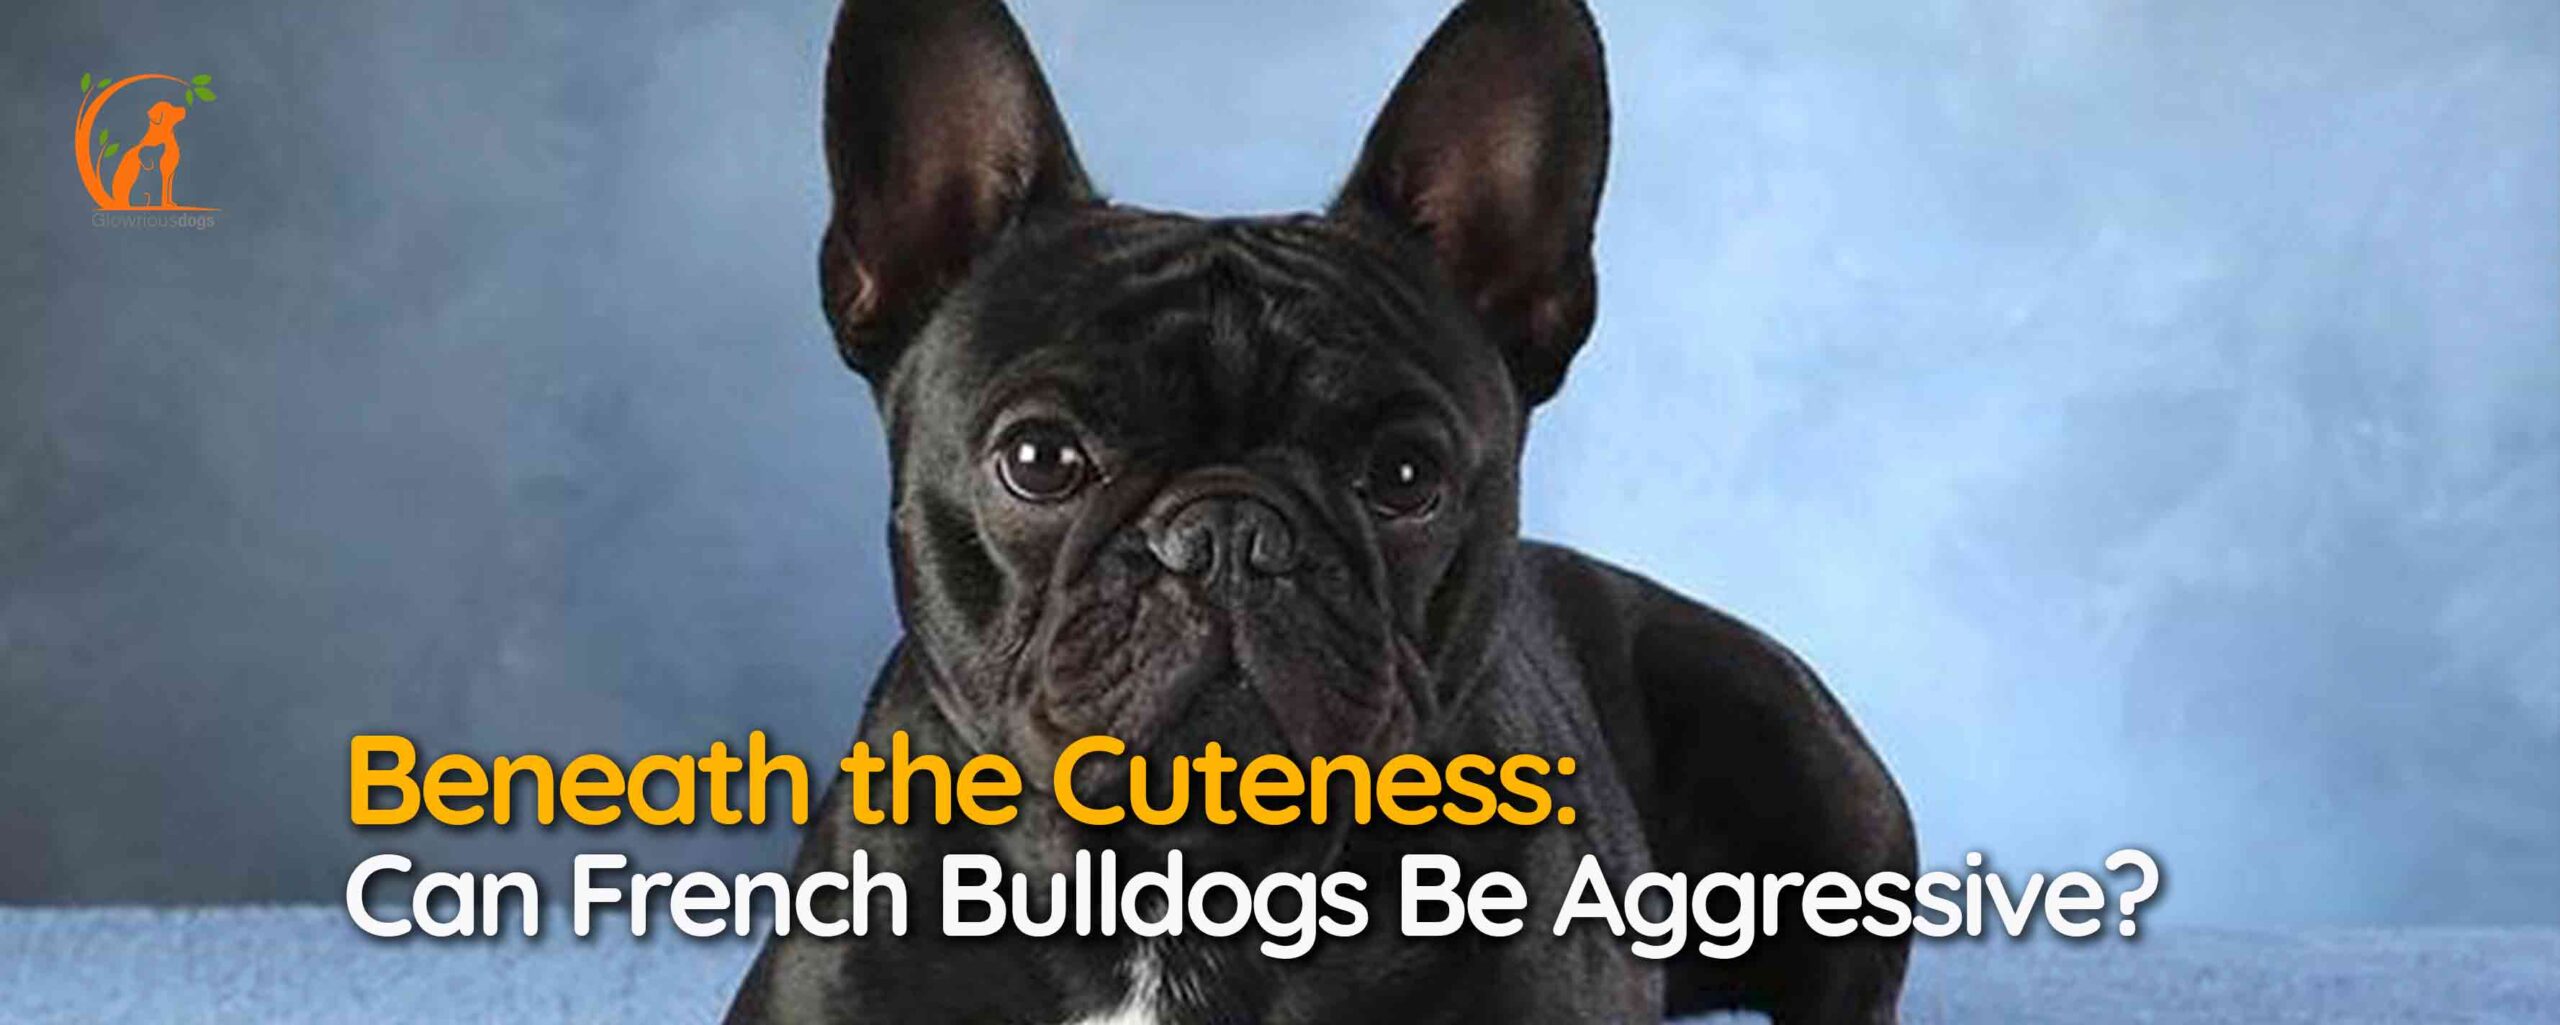 Beneath the Cuteness: Can French Bulldogs Be Aggressive?